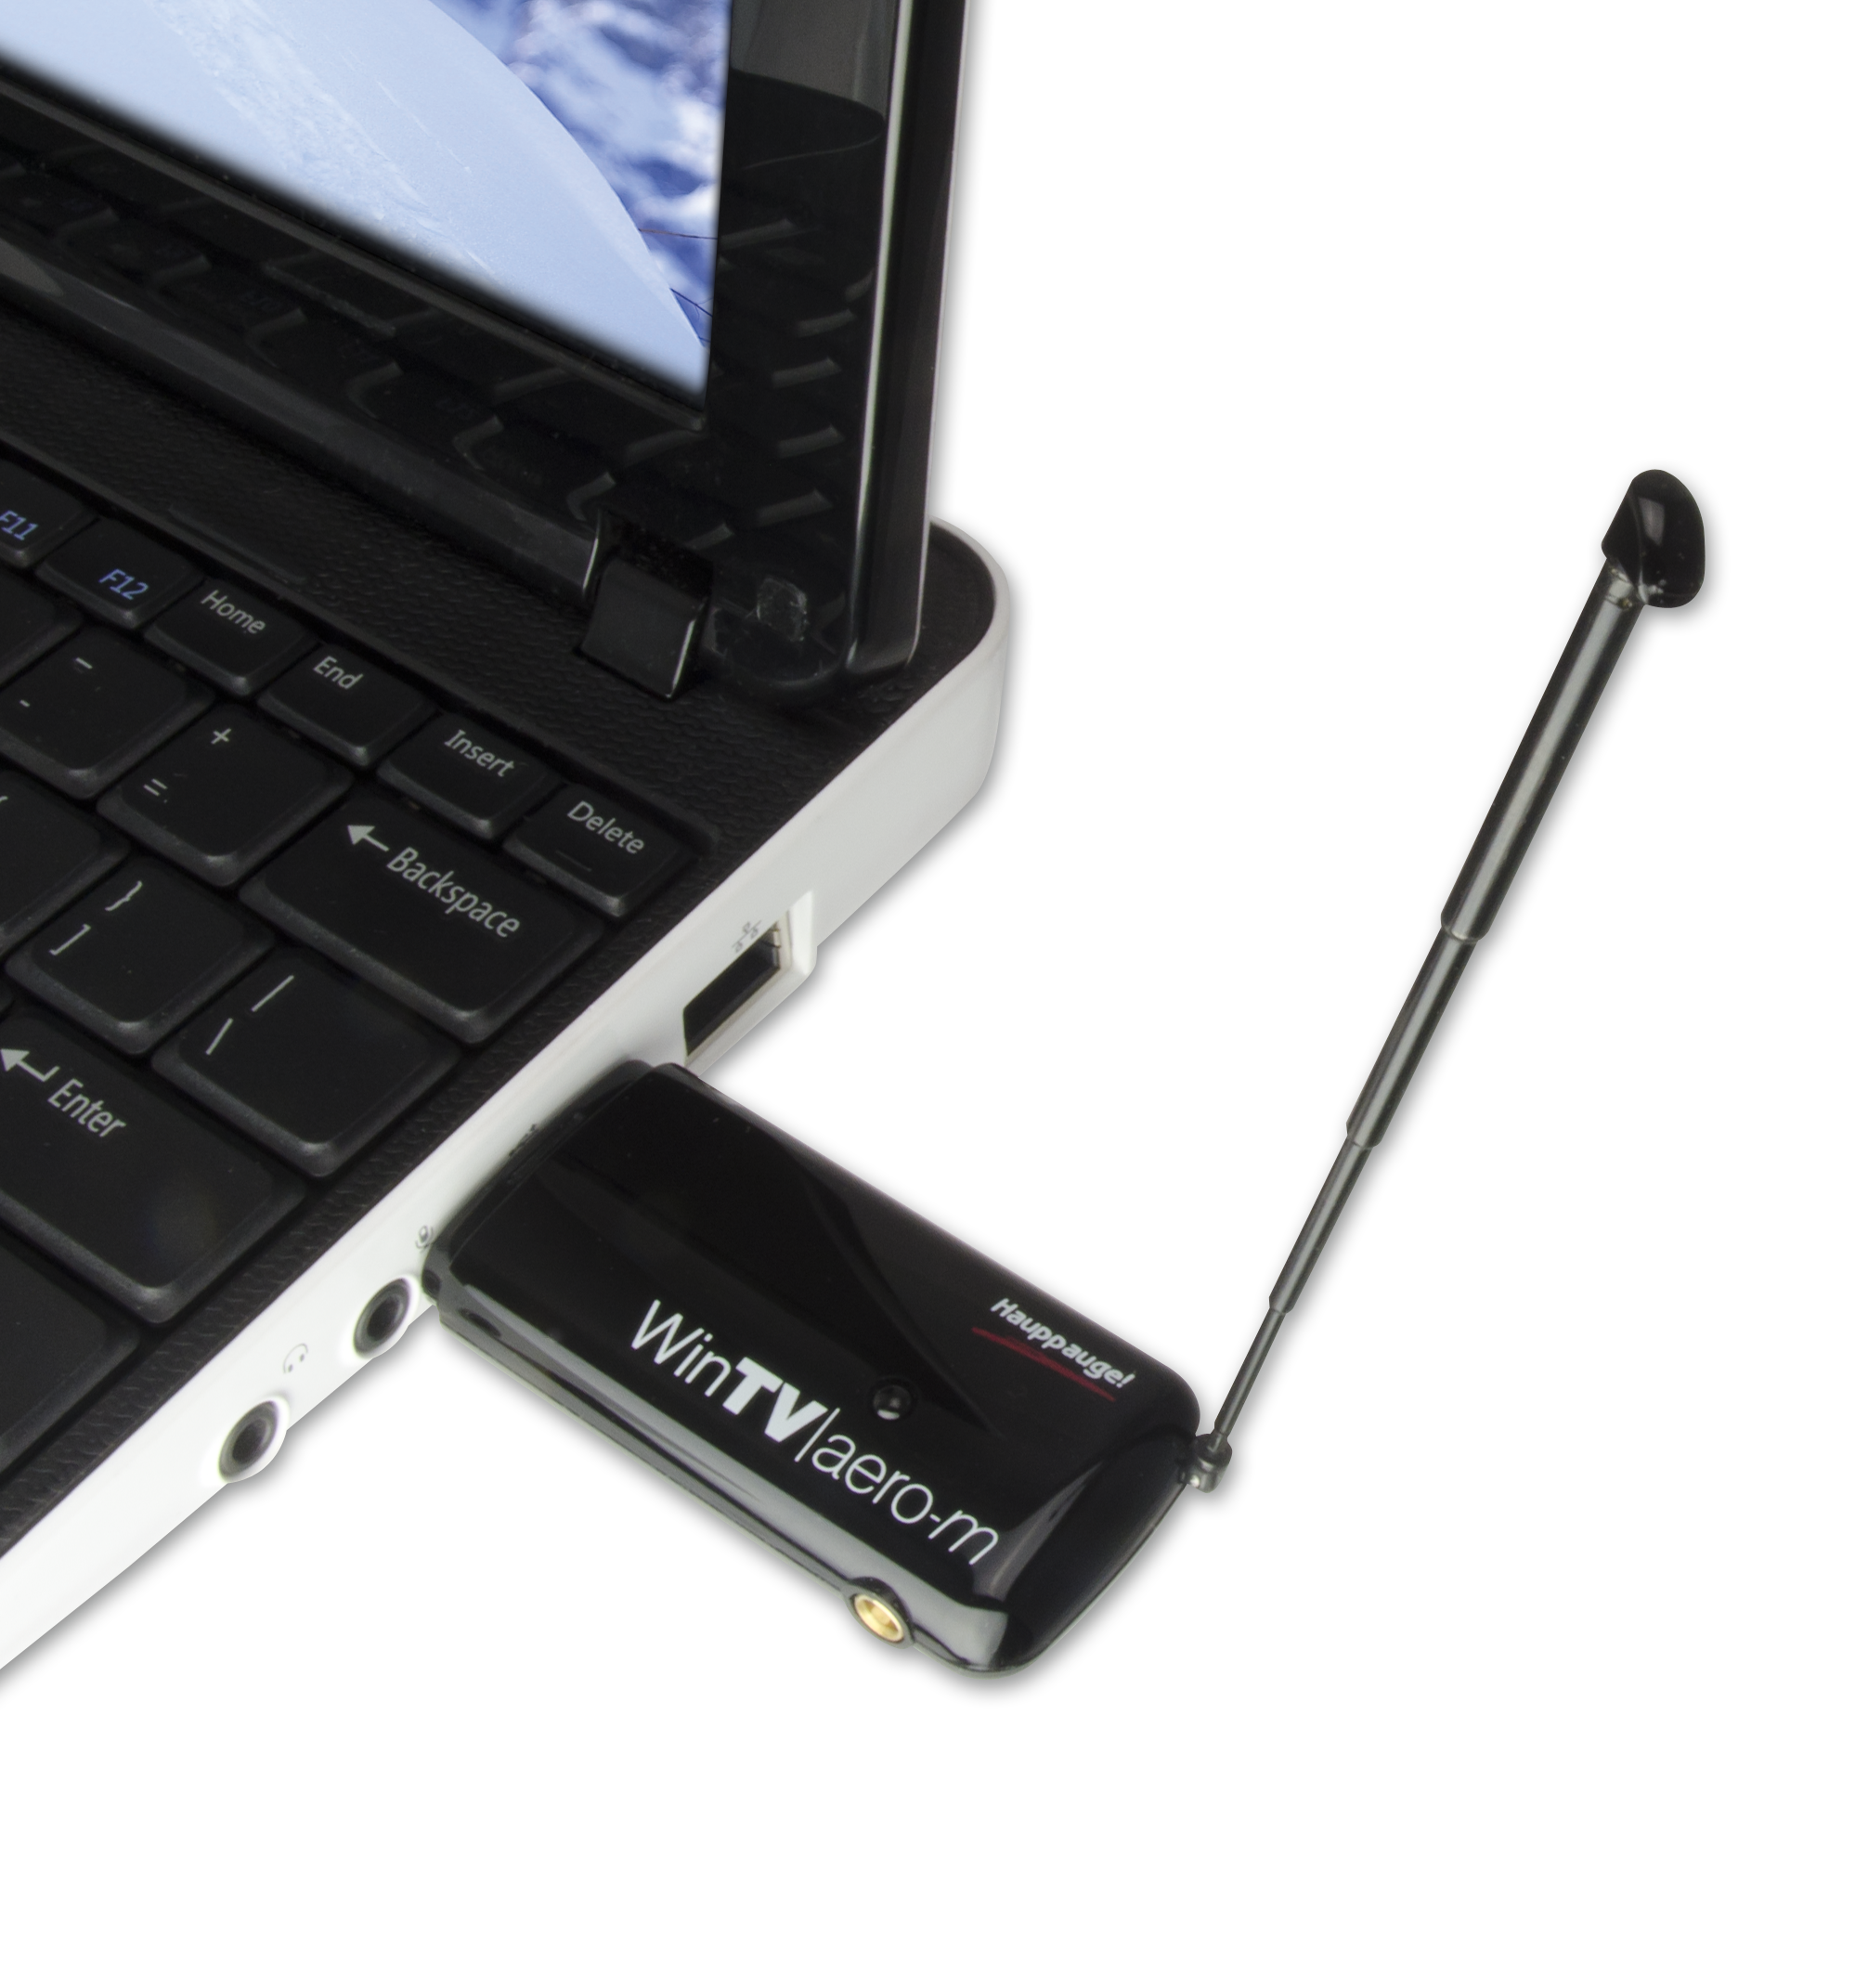 WinTV-Aero-m connected to laptop